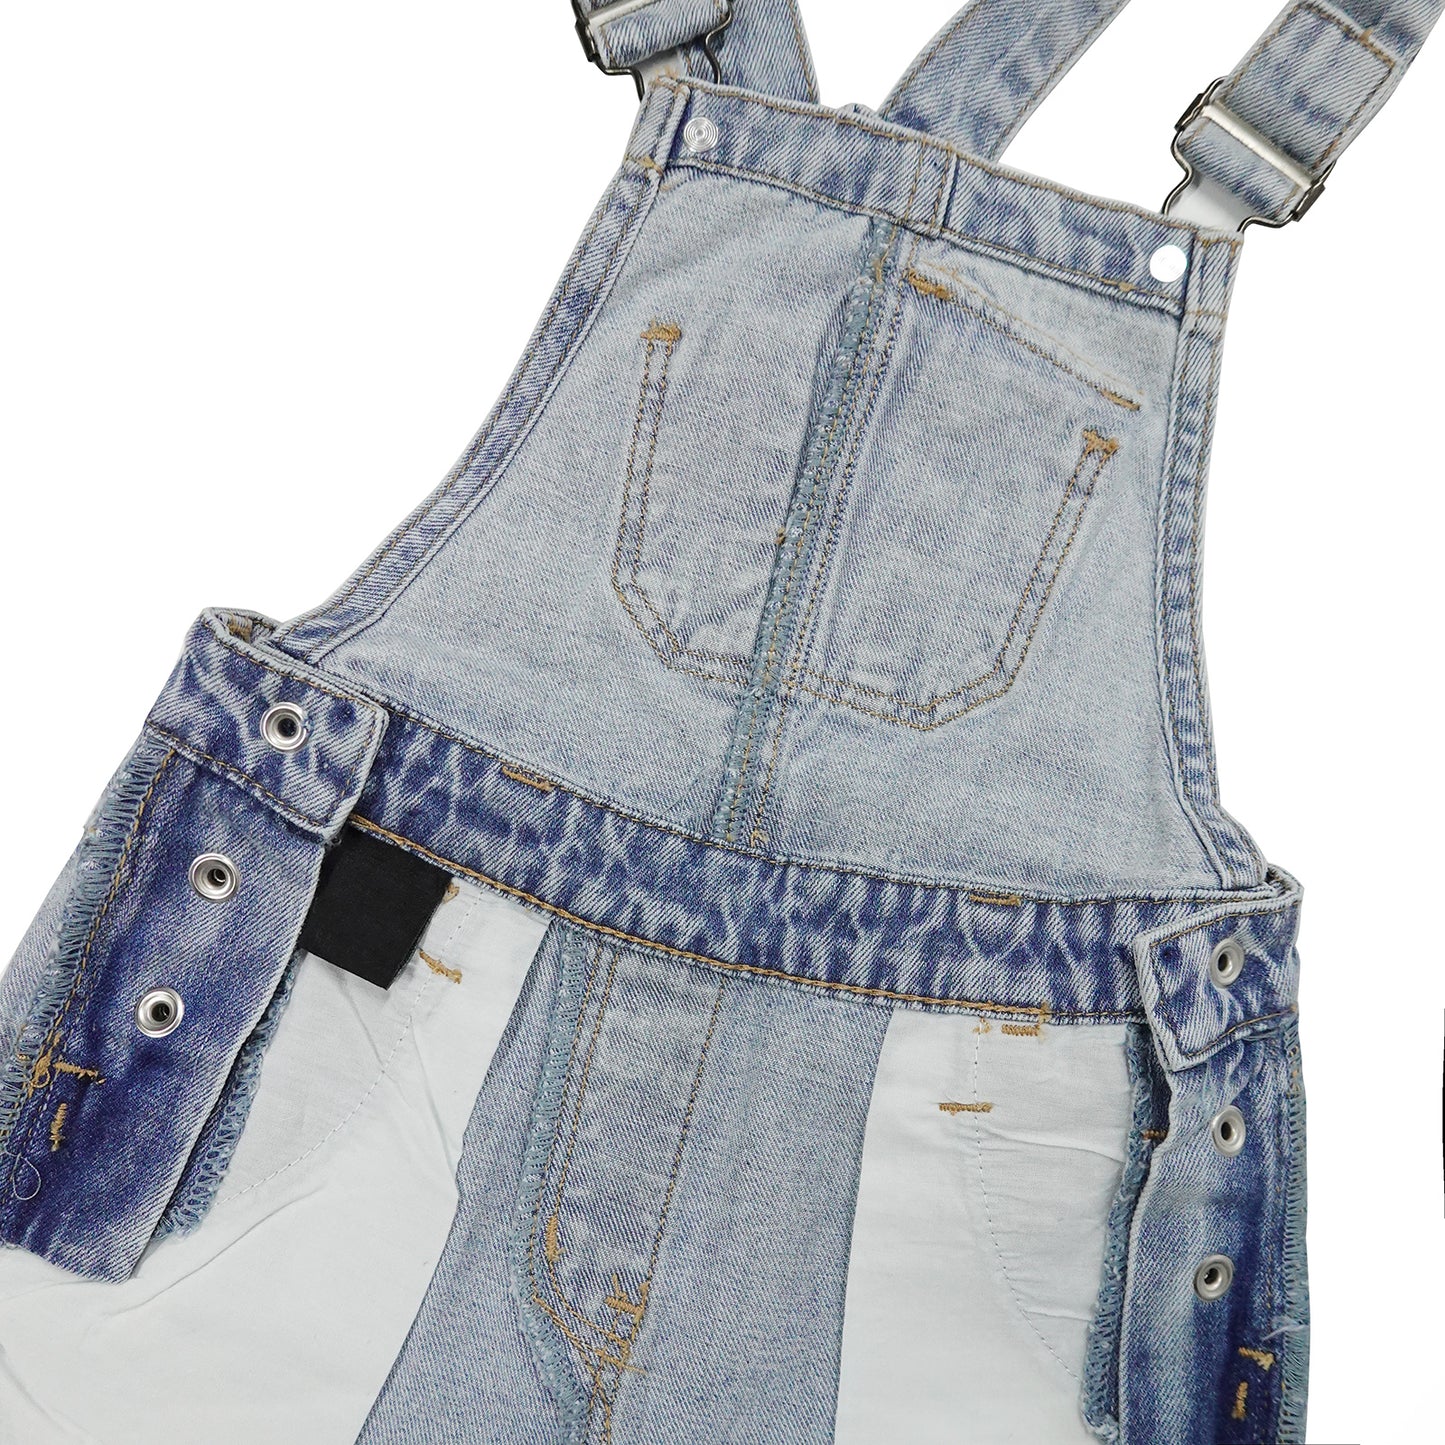 Unisex Kids Ripped Adjustable Straps Summer Jeans Shortalls